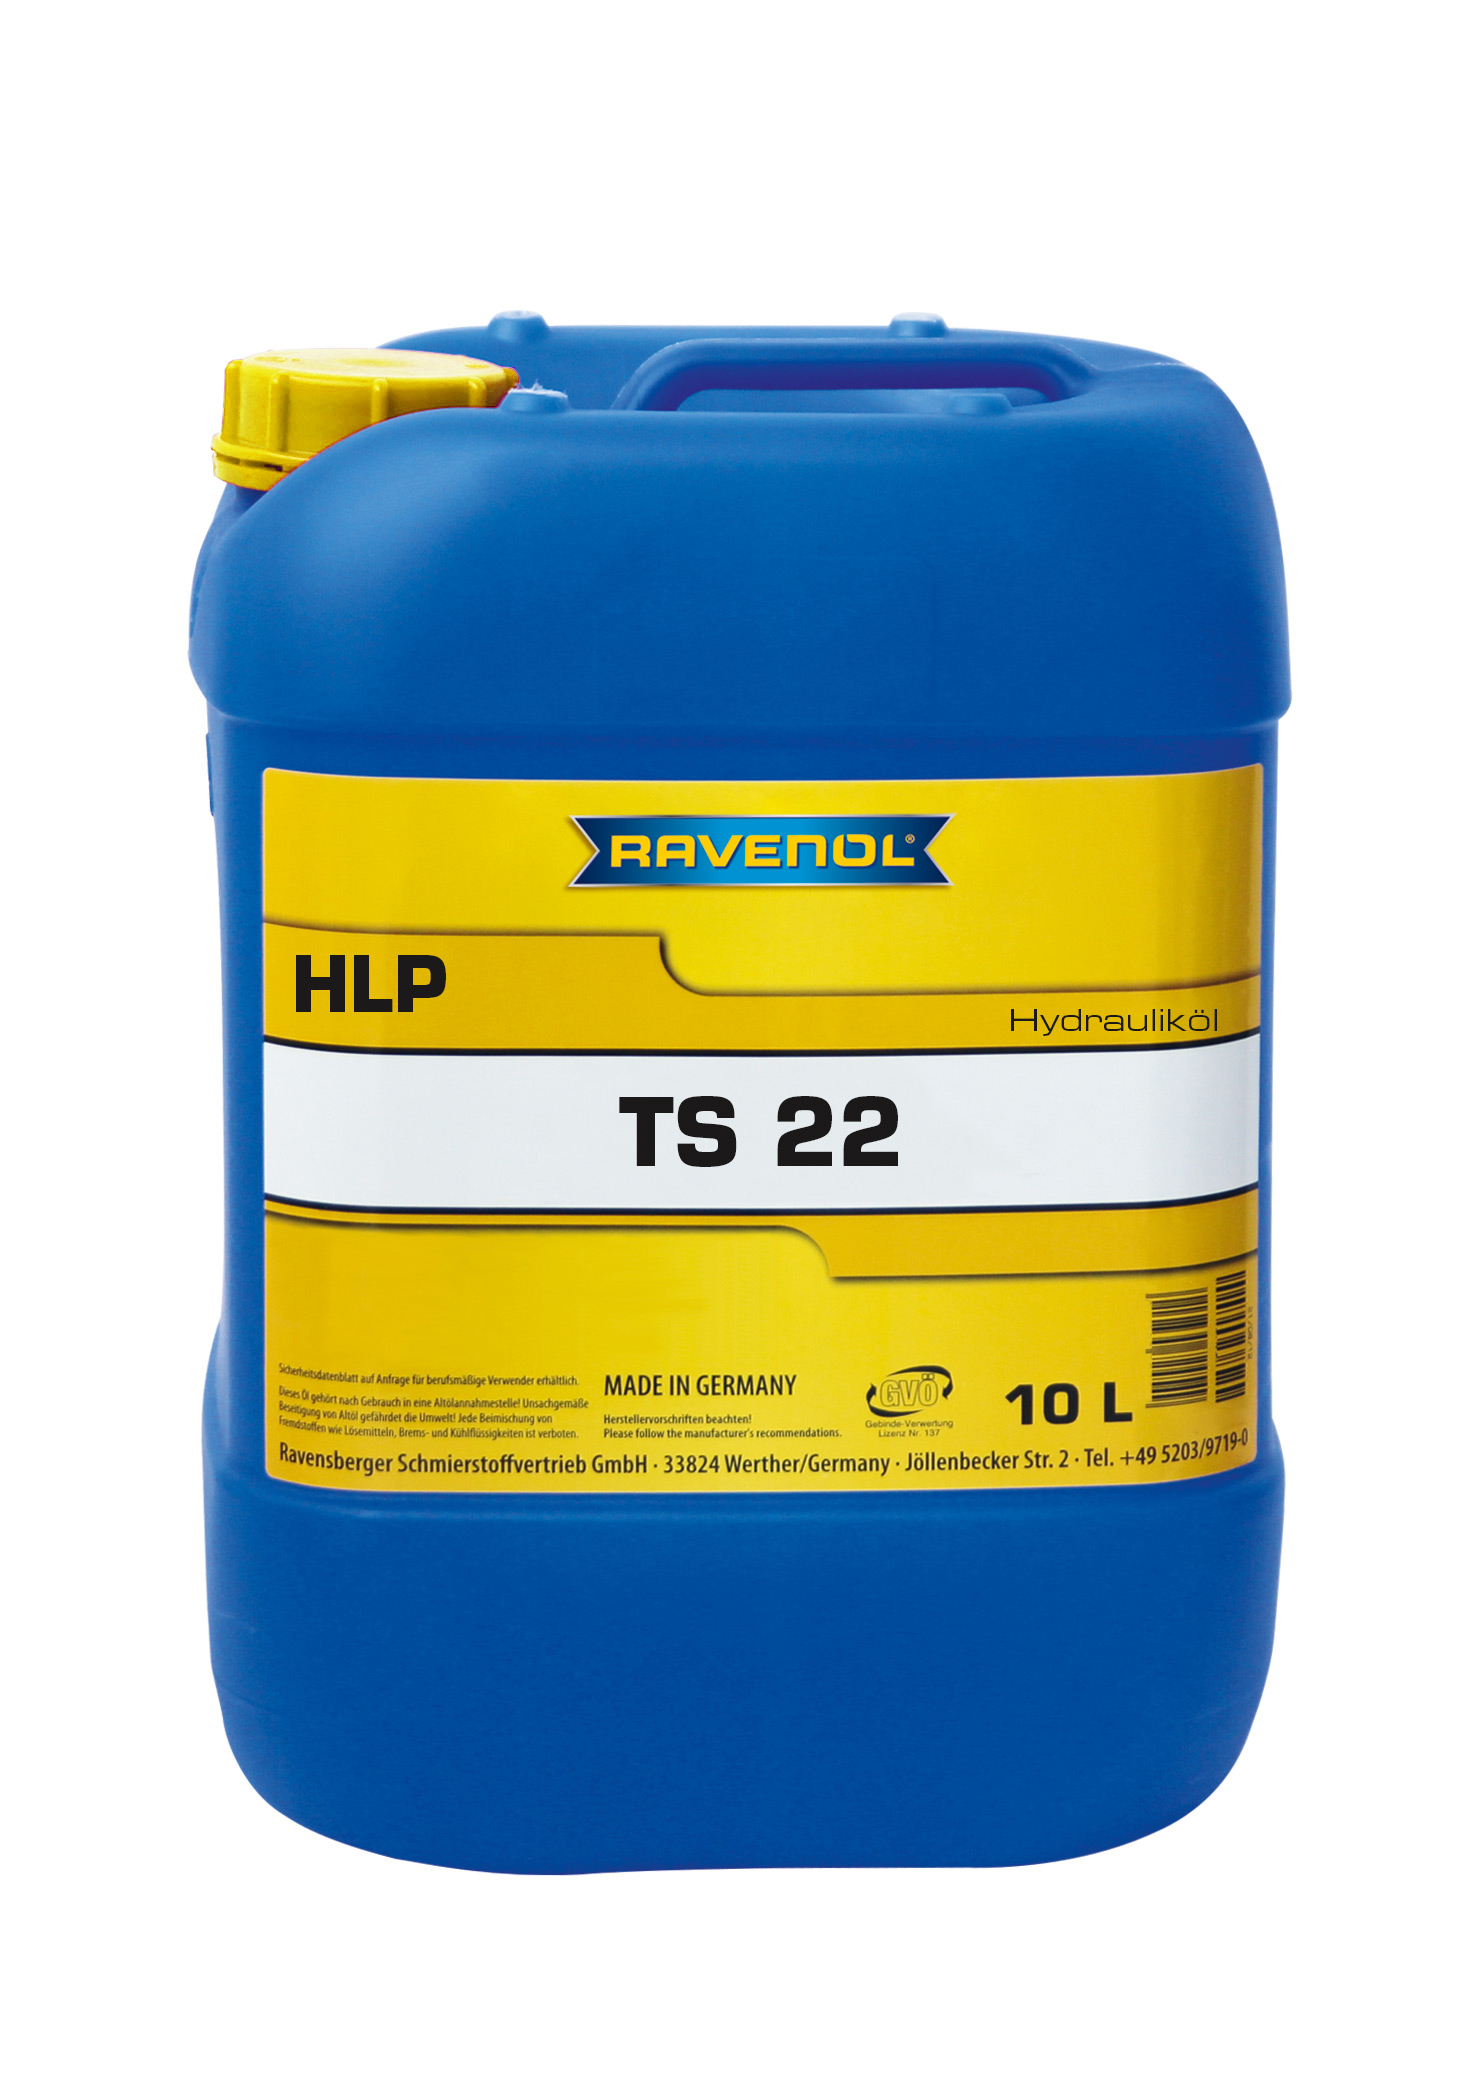 RAVENOL Hydraulikoel TS 22 (HLP)